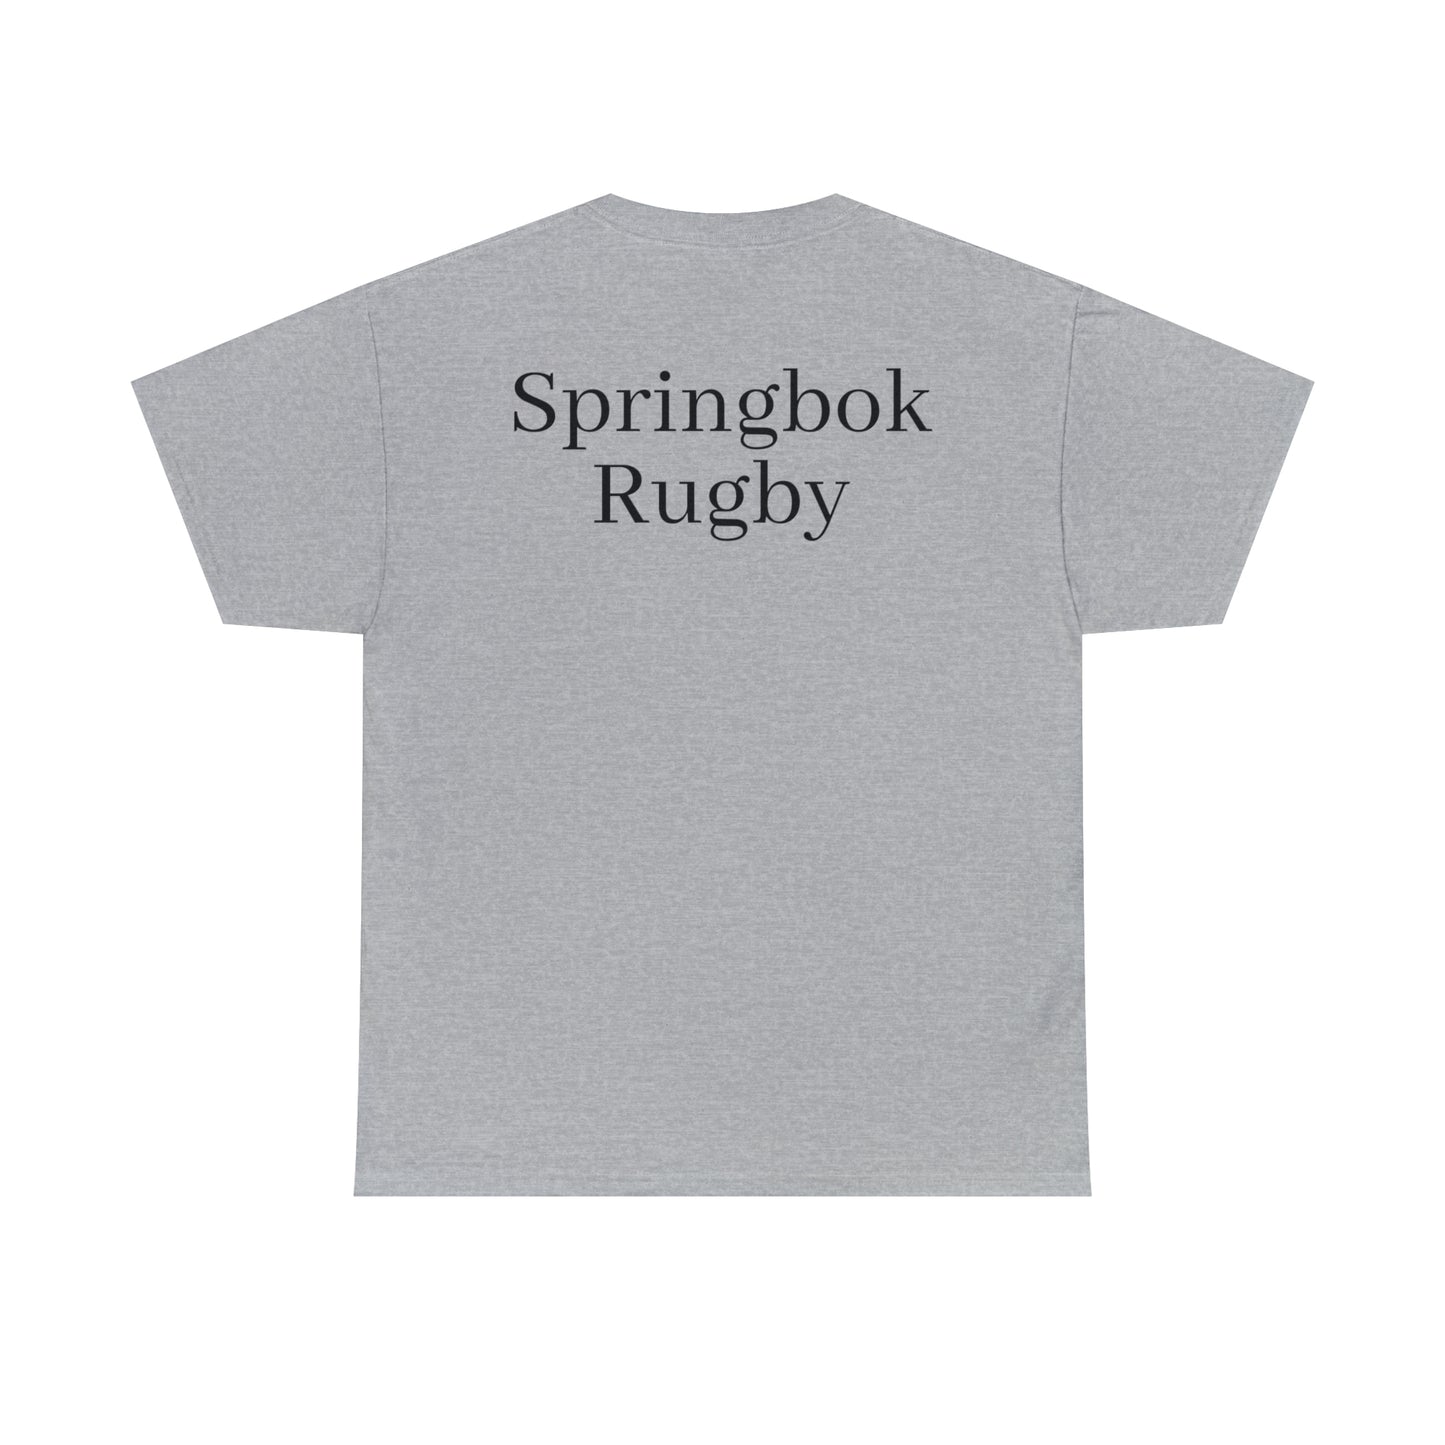 Springboks Celebrating - light shirts